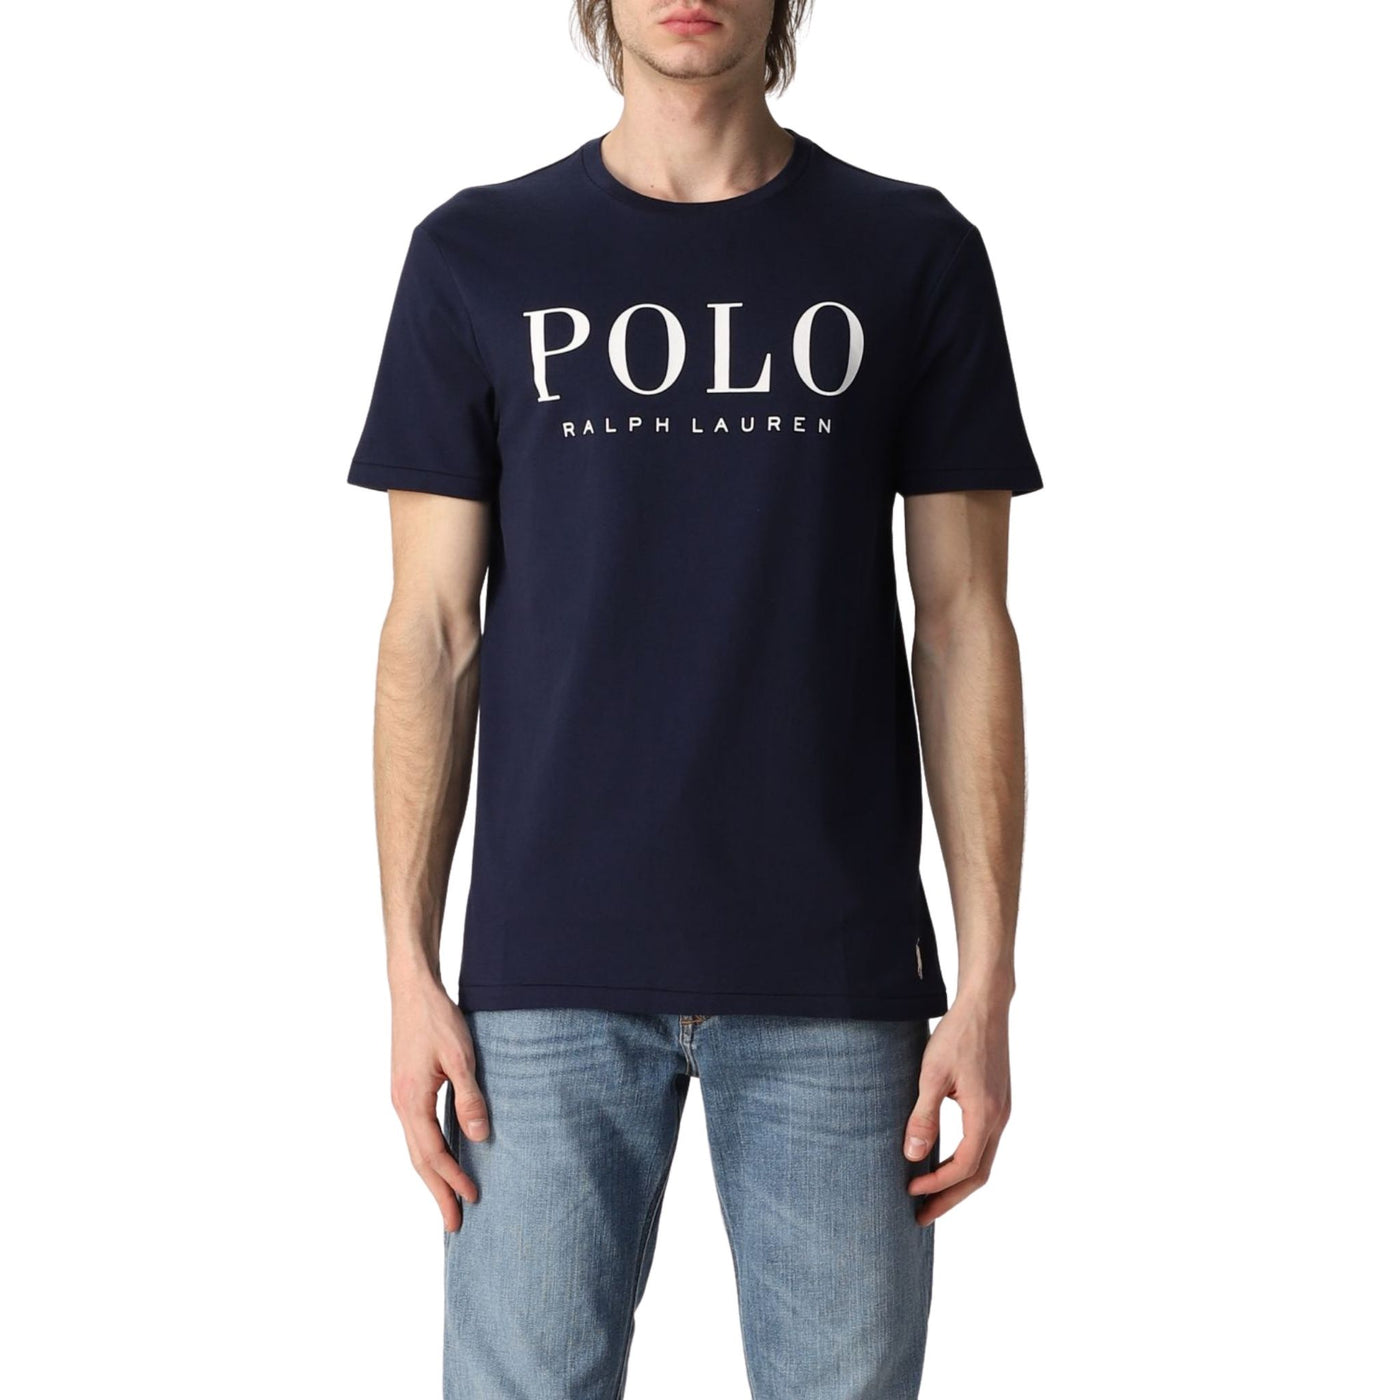 T-shirt uomo blu navy Polo Ralph Lauren su modello vista frontale